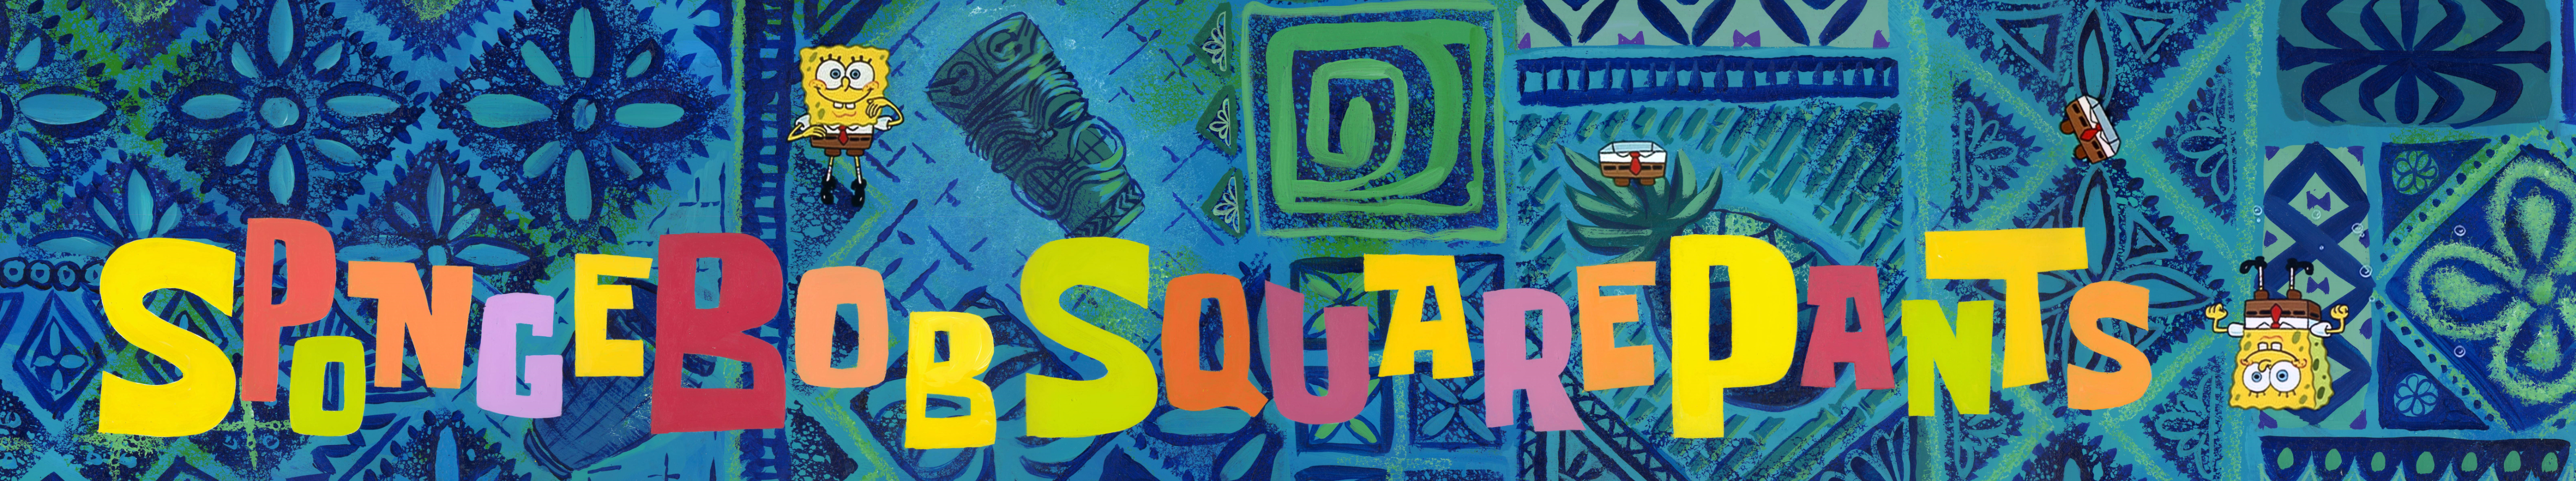 spongebob squarepants theme song lyrics